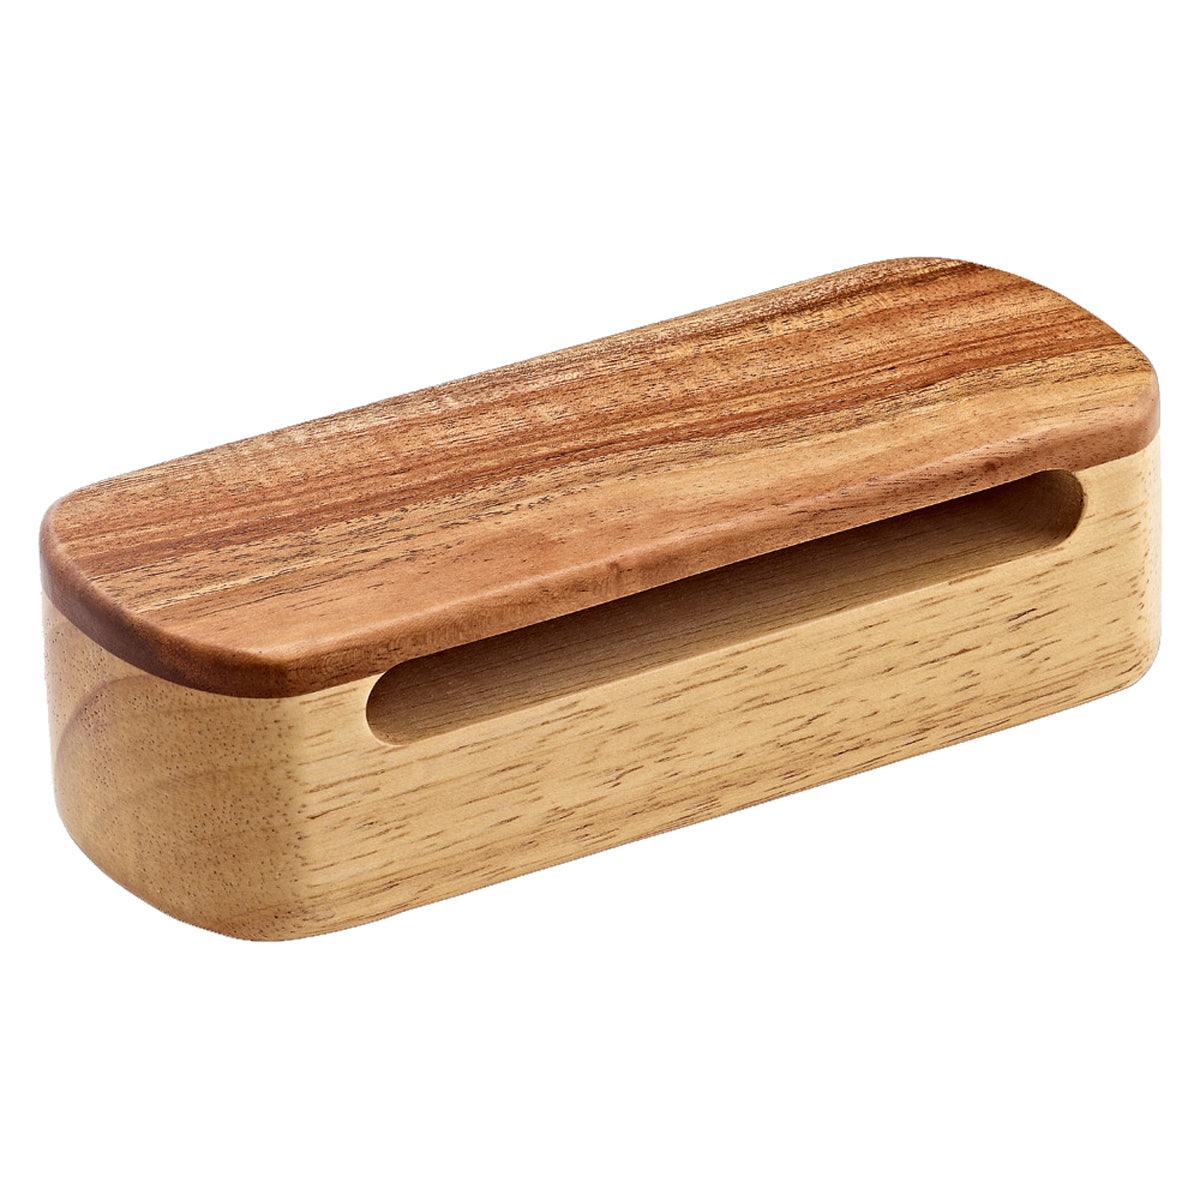 Meinl Professional Wood Block - Medium